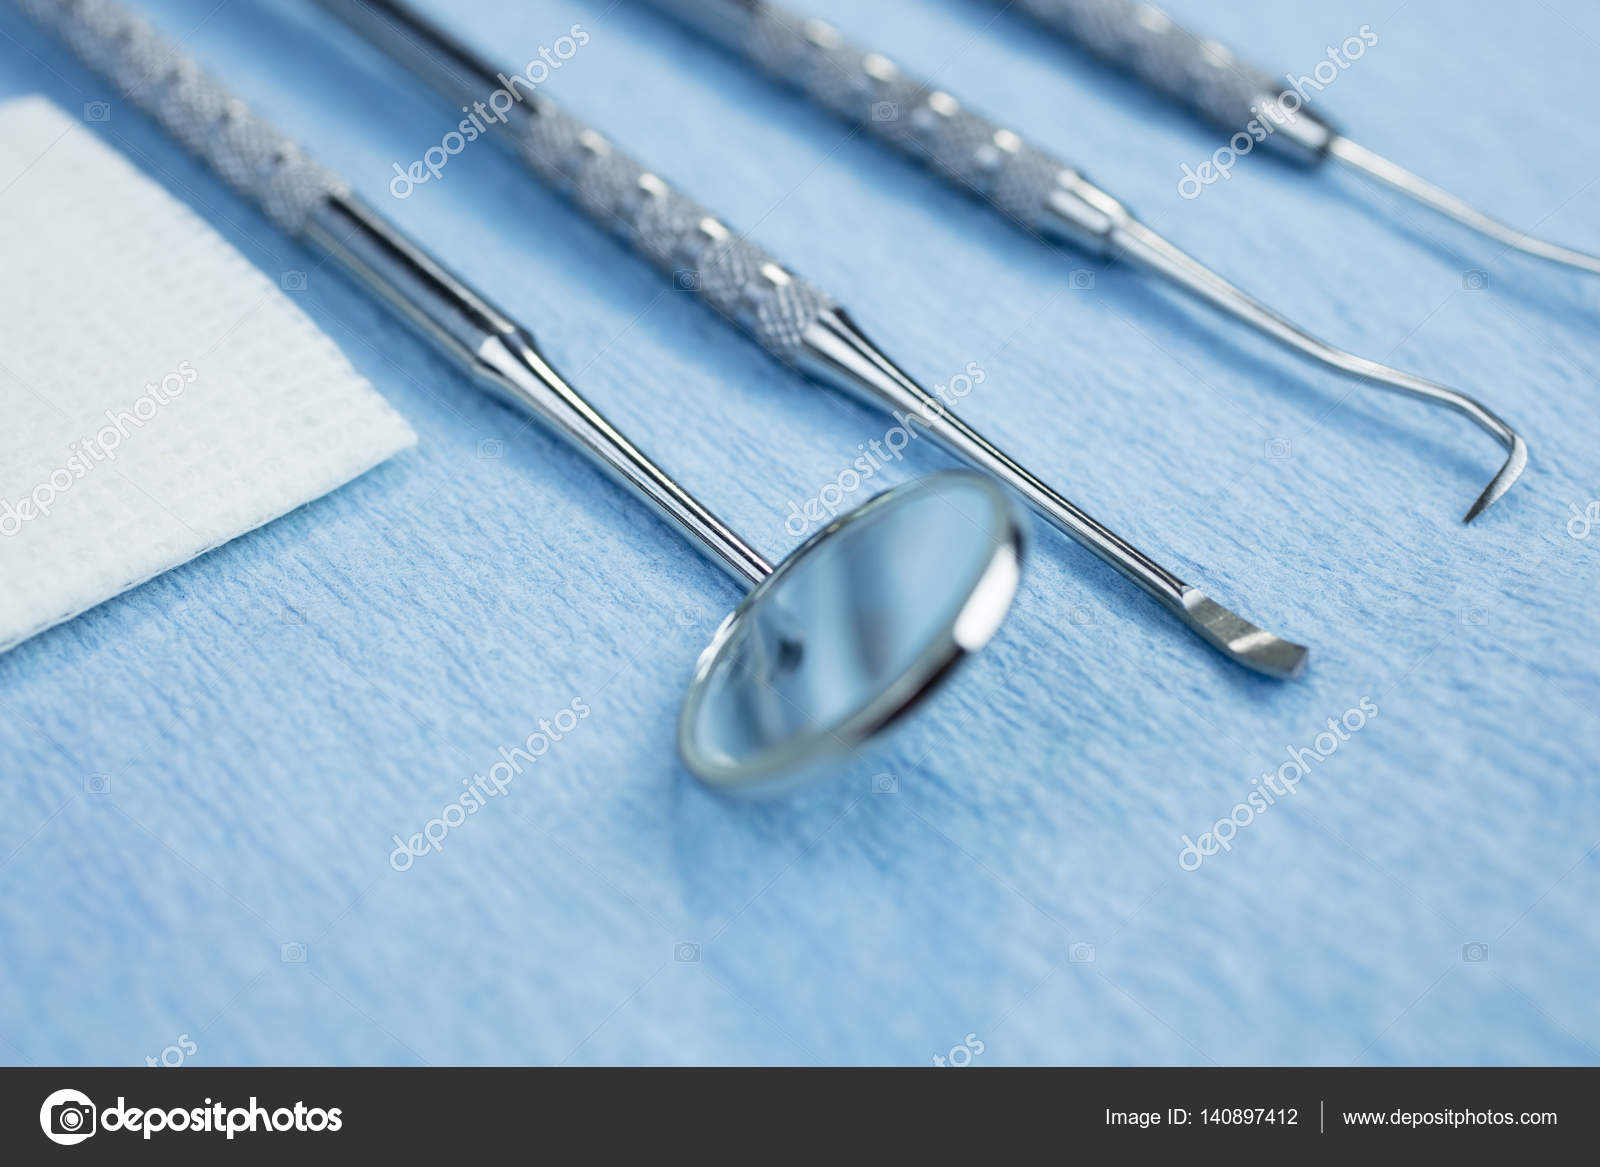 Tray of Dental Tools stock image. Image of dentist, gauze - 12539807